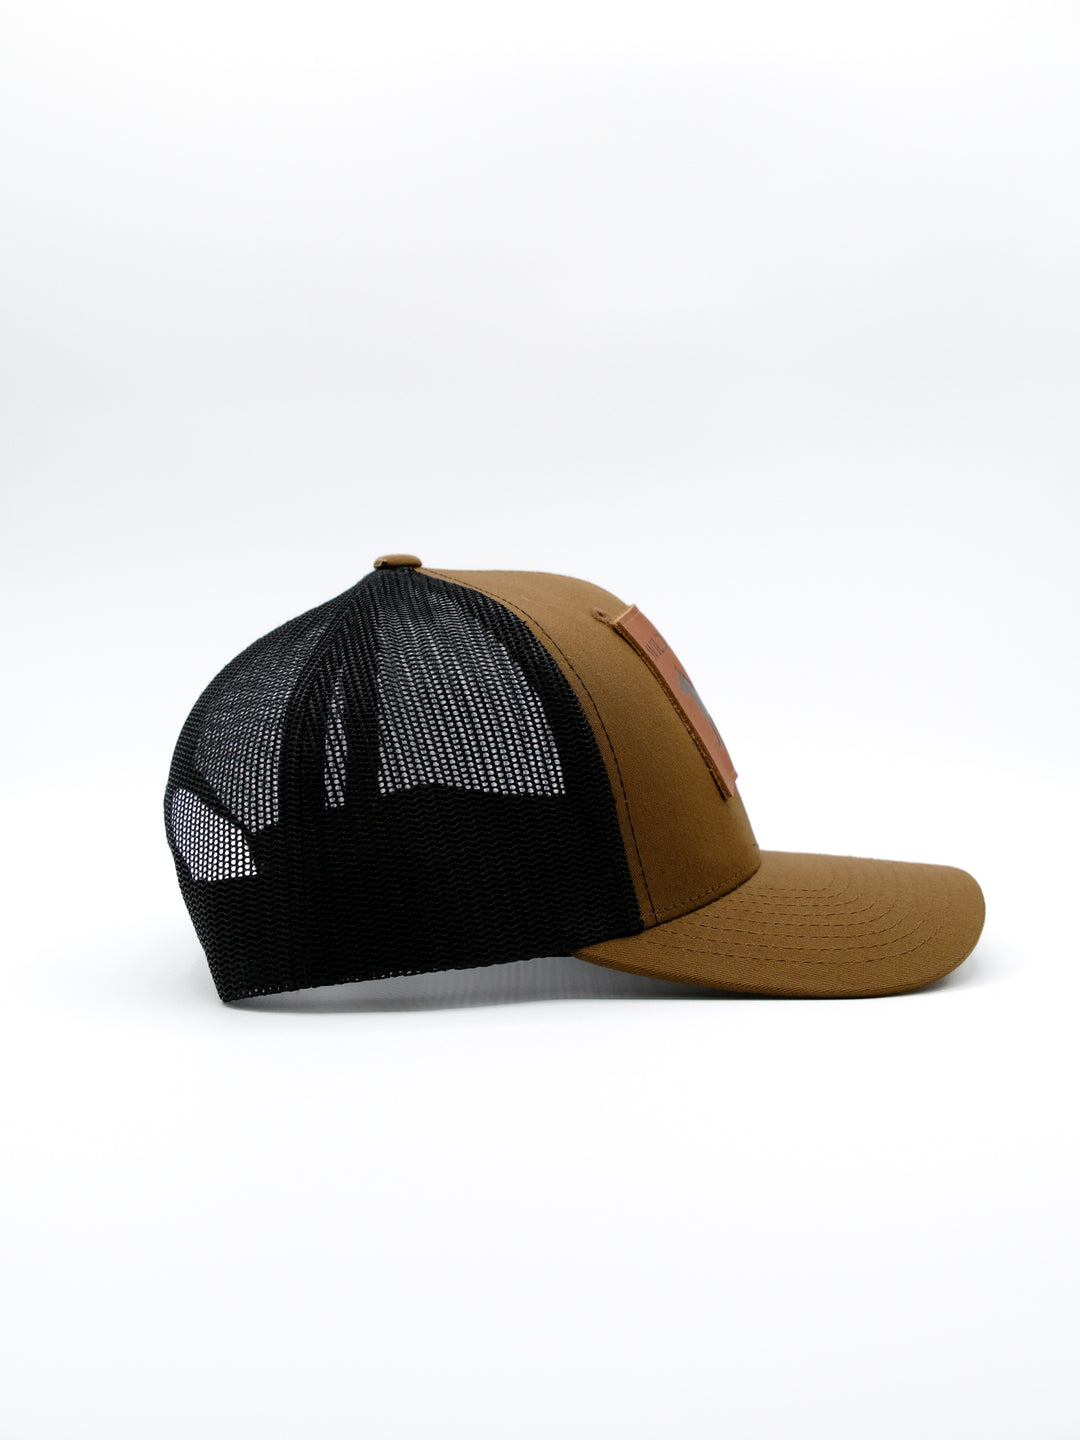 Camel/Black Trucker Hat